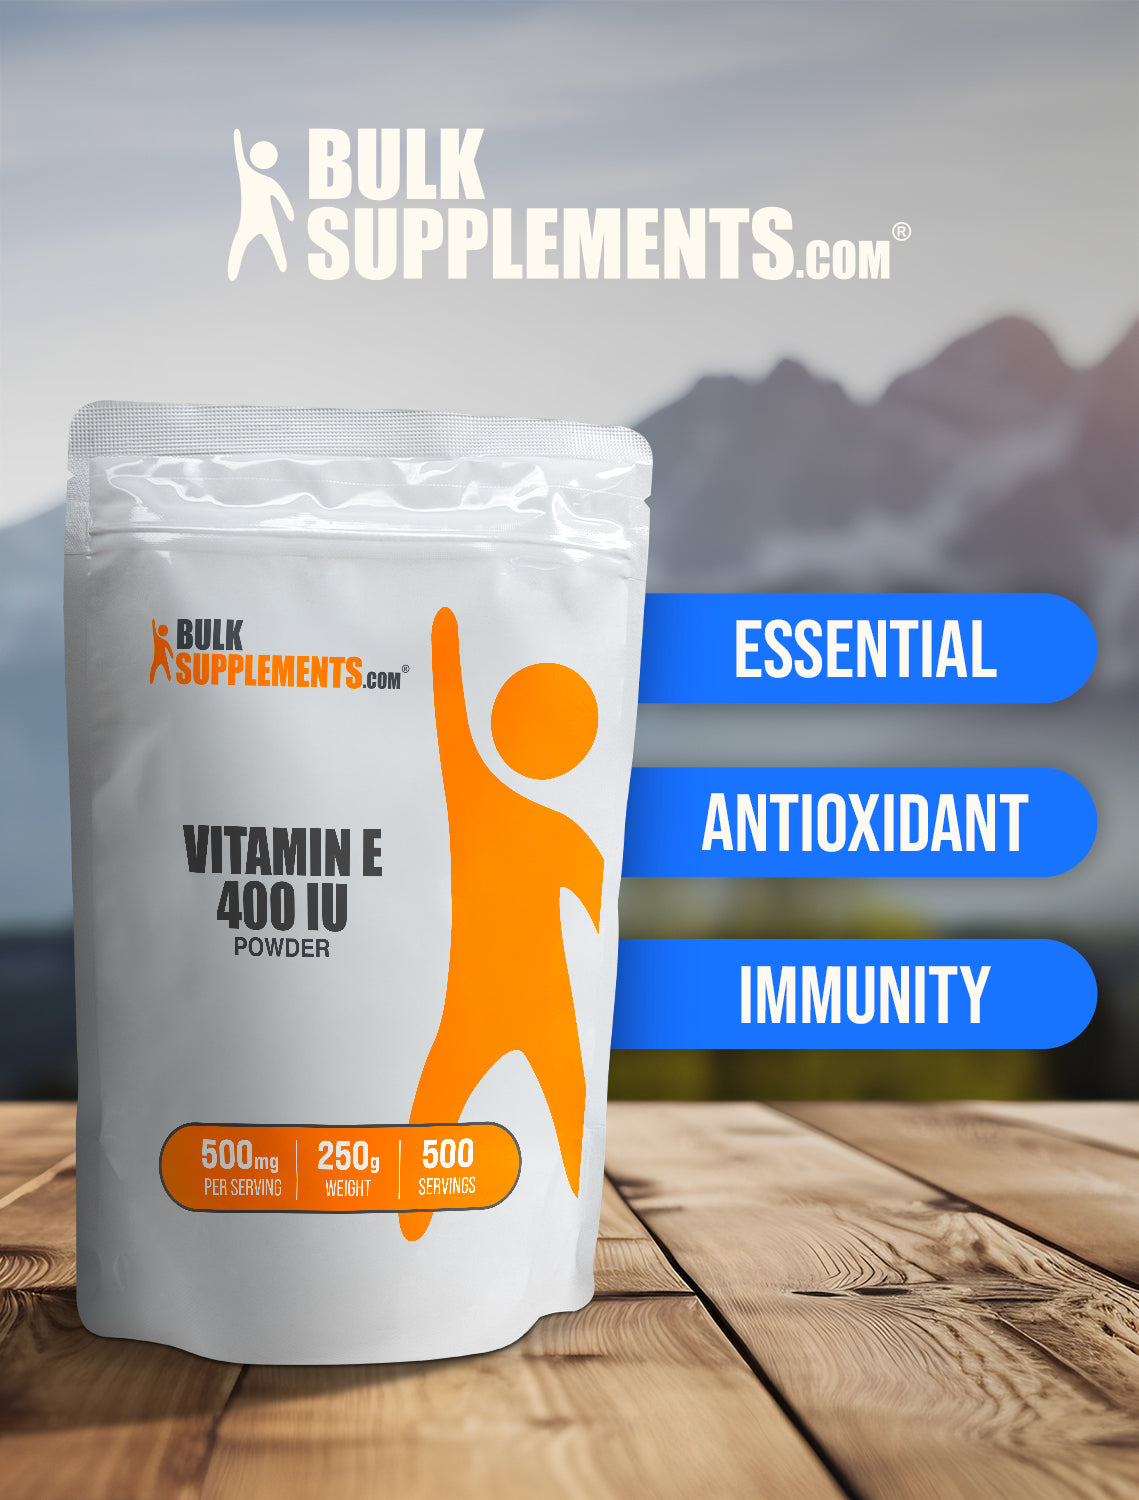 Vitamin E powder keyword image 250g